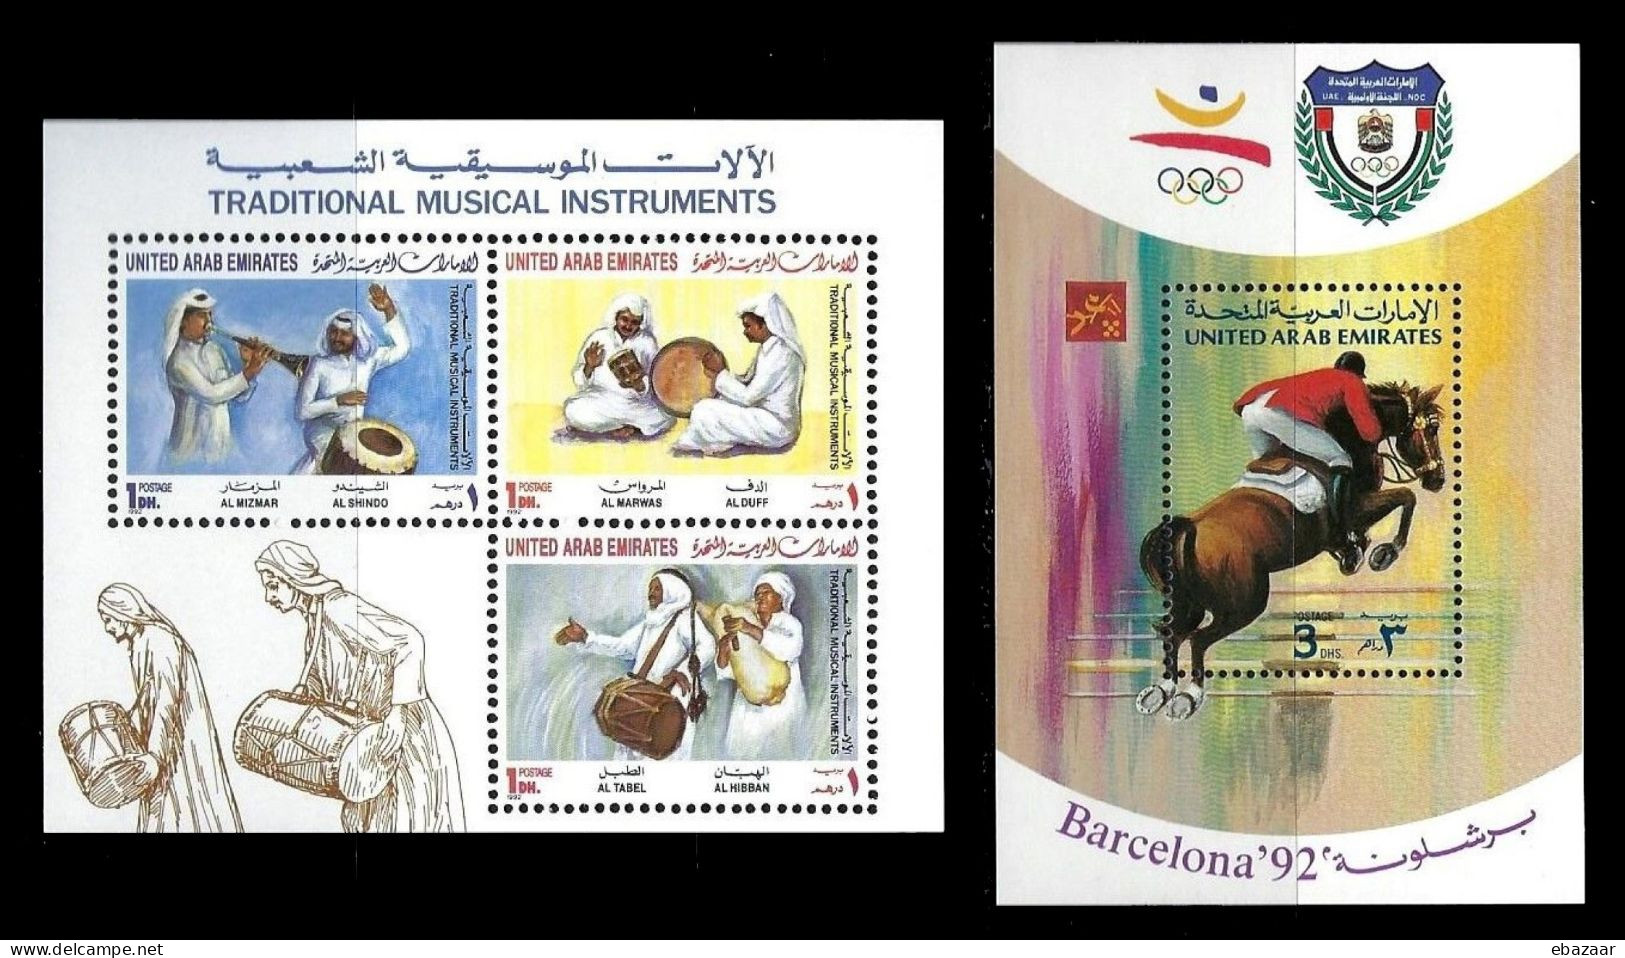 United Arab Emirates 1992 UAE Stamps MNH - United Arab Emirates (General)